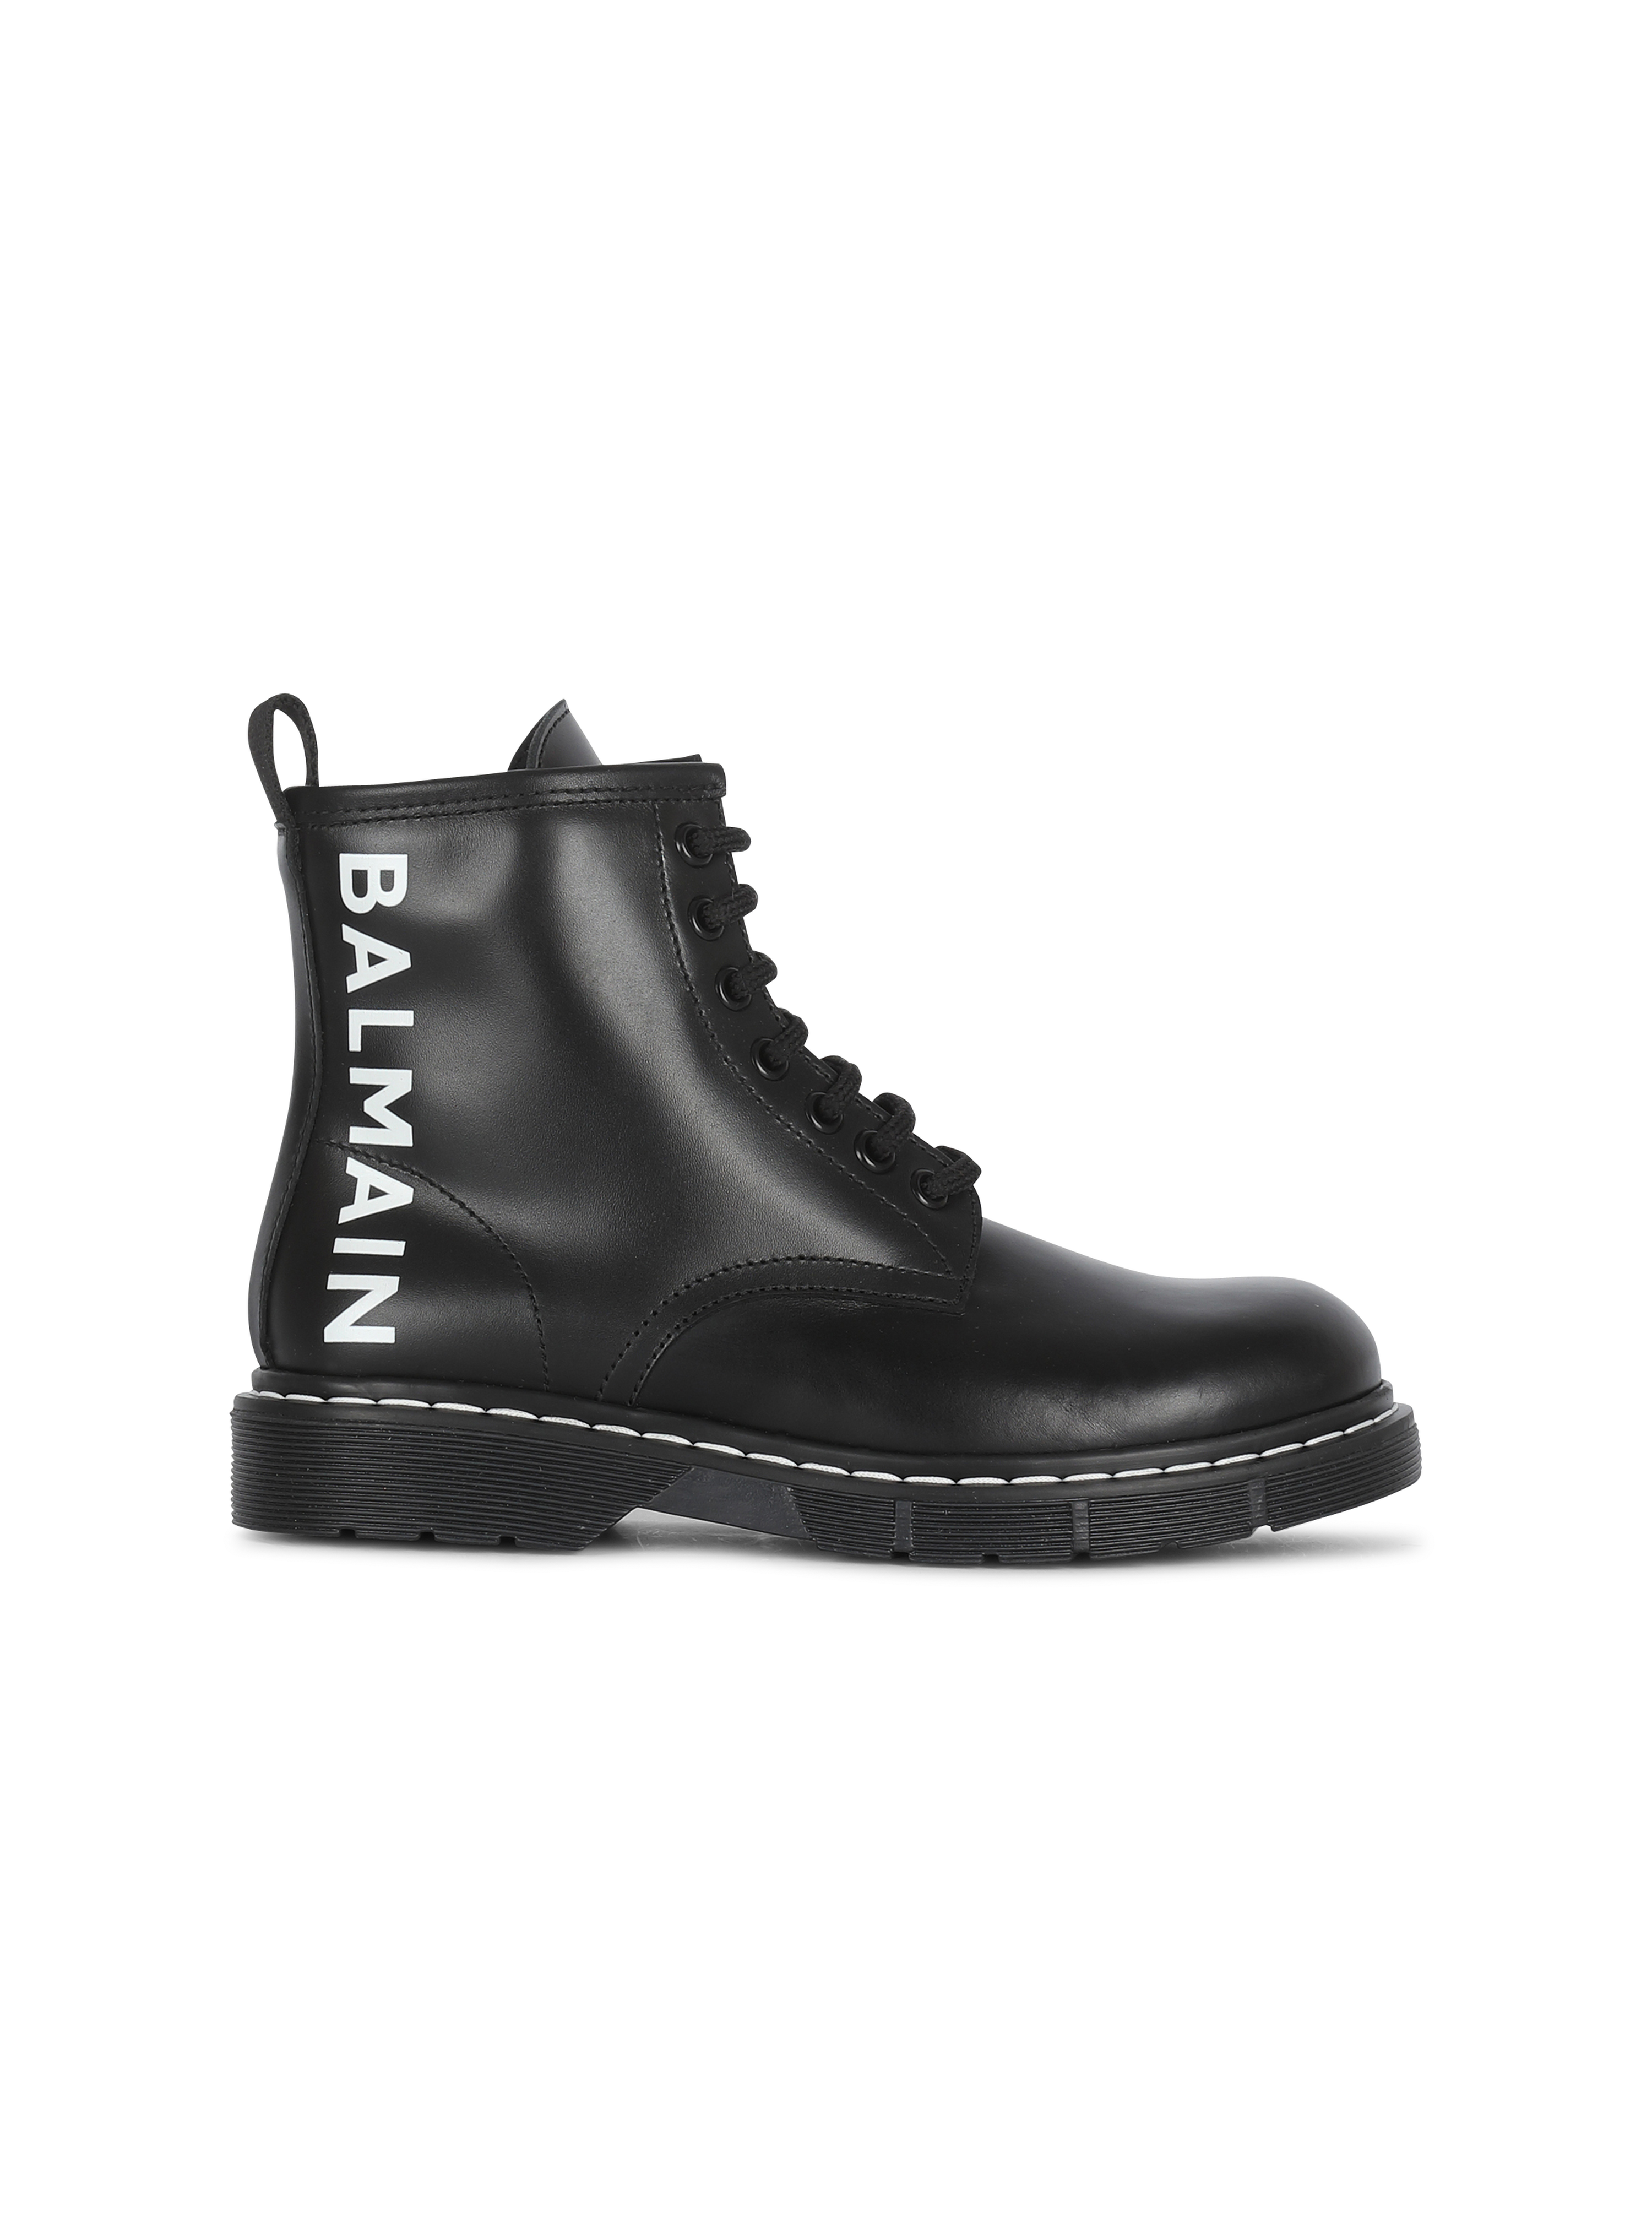 Balmain巴尔曼标志皮革短靴, black